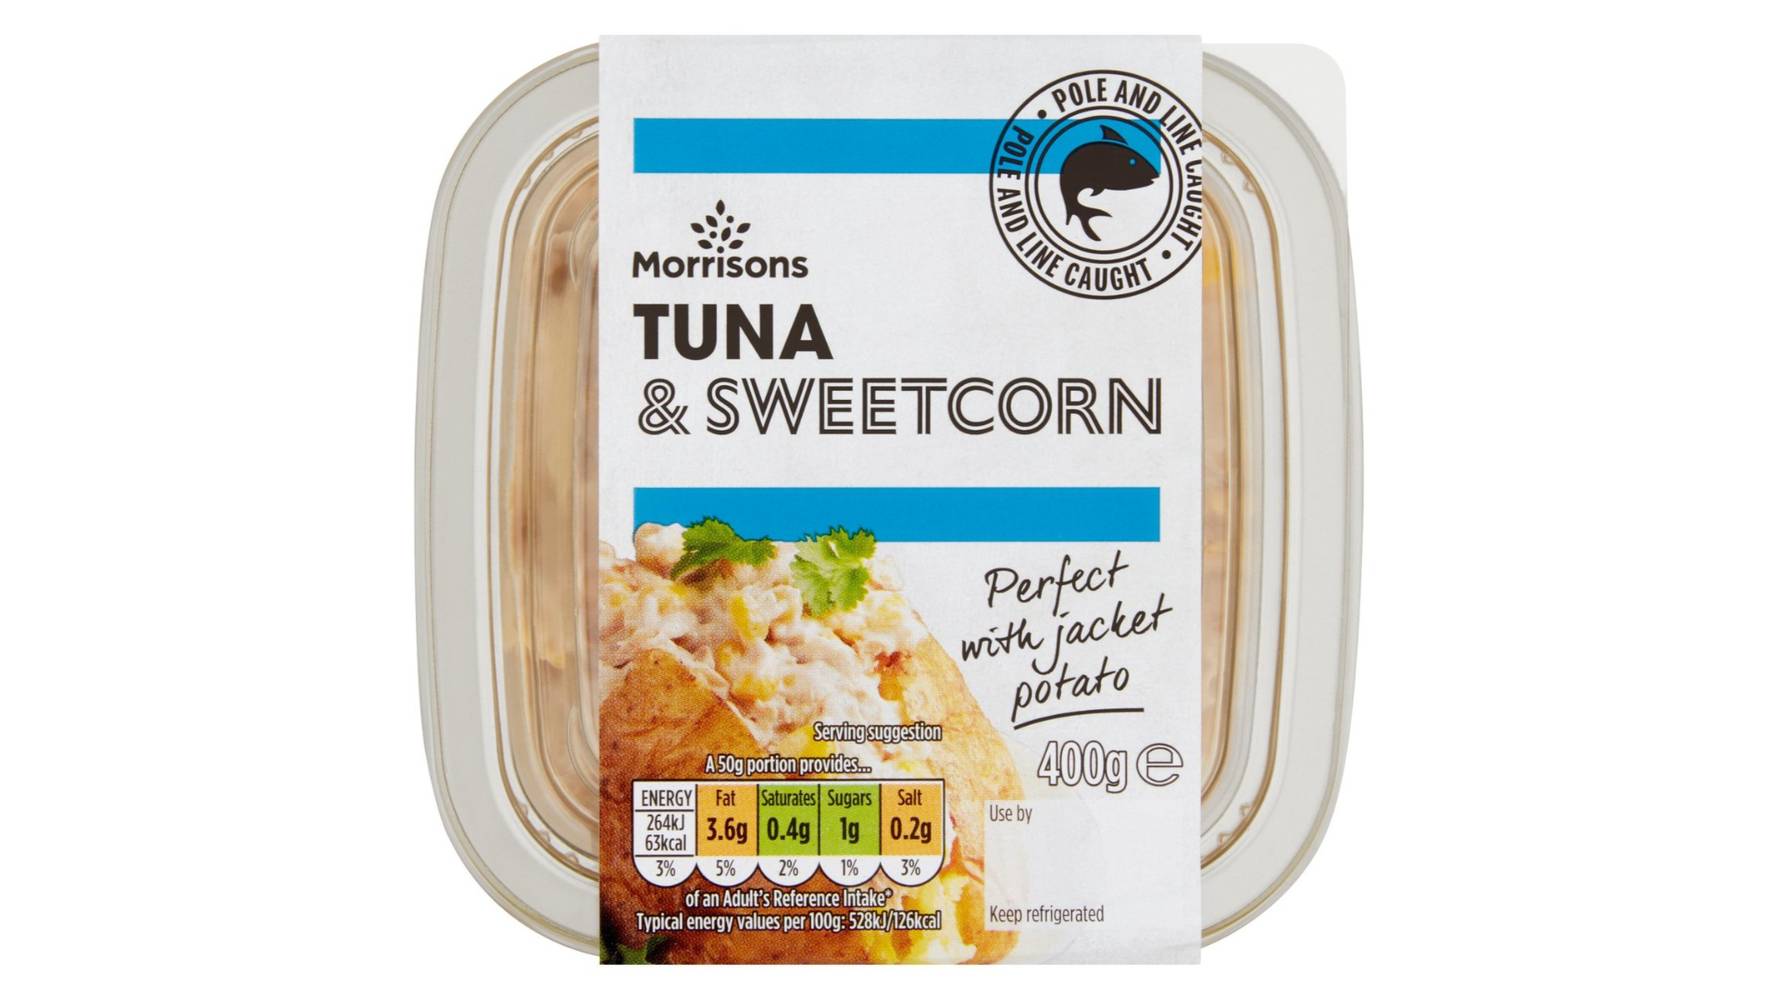 Morrisons Tuna & Sweetcorn 400g